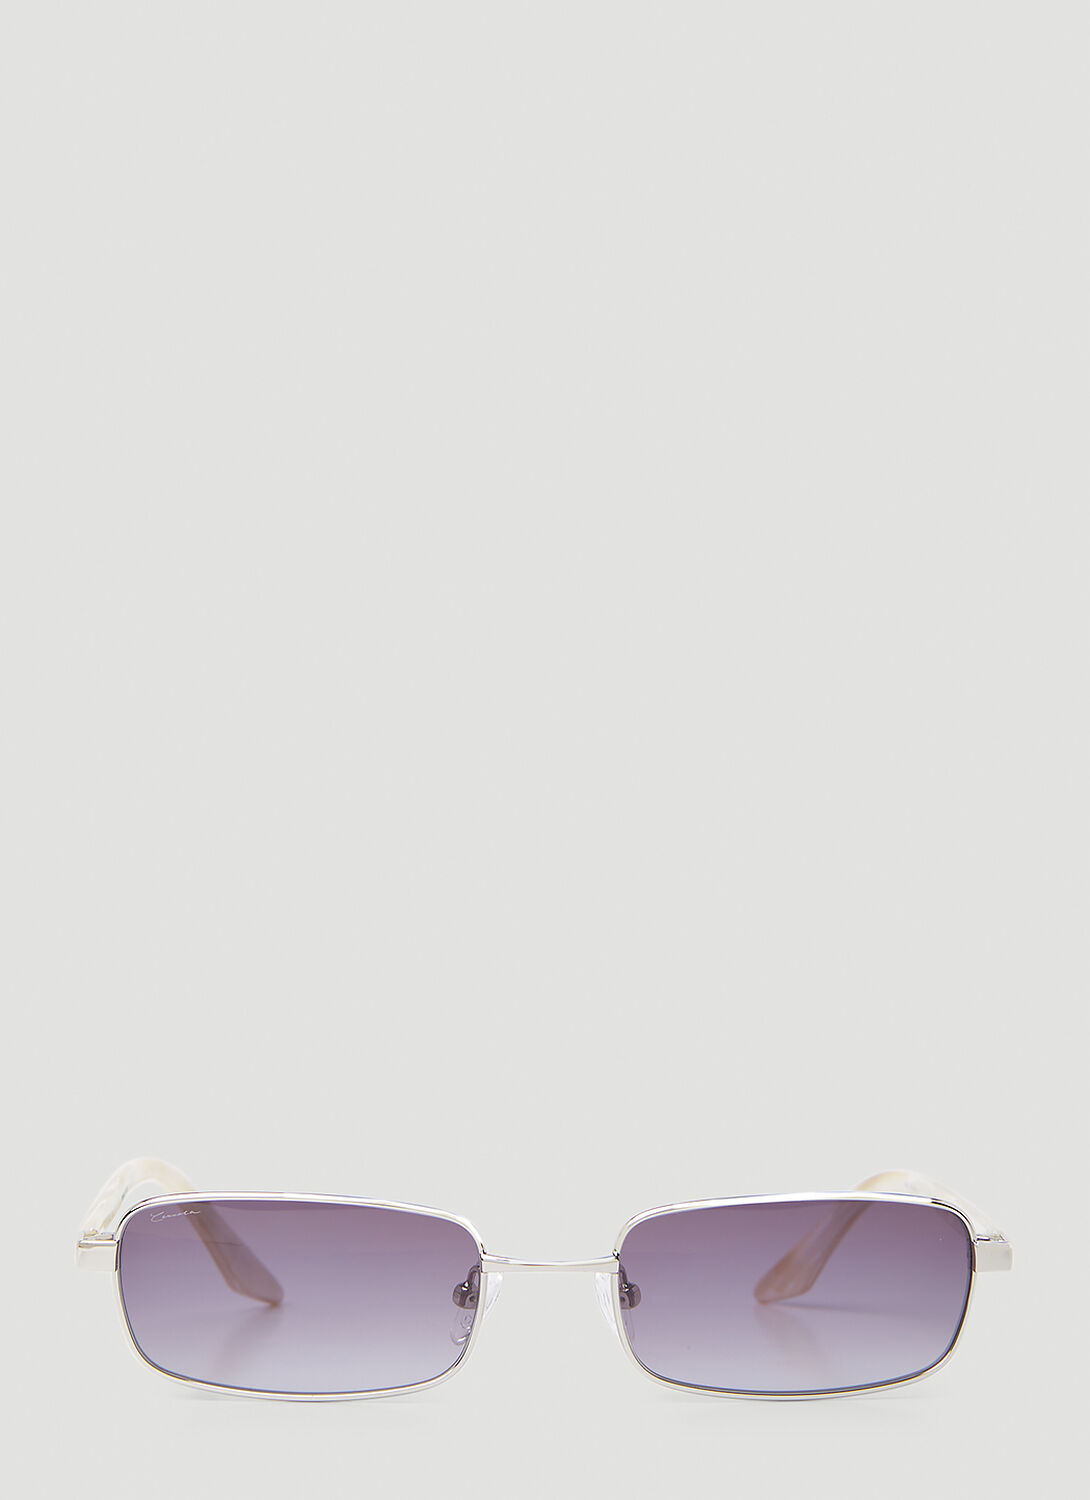 Lexxola Kenny Sunglasses In Purple